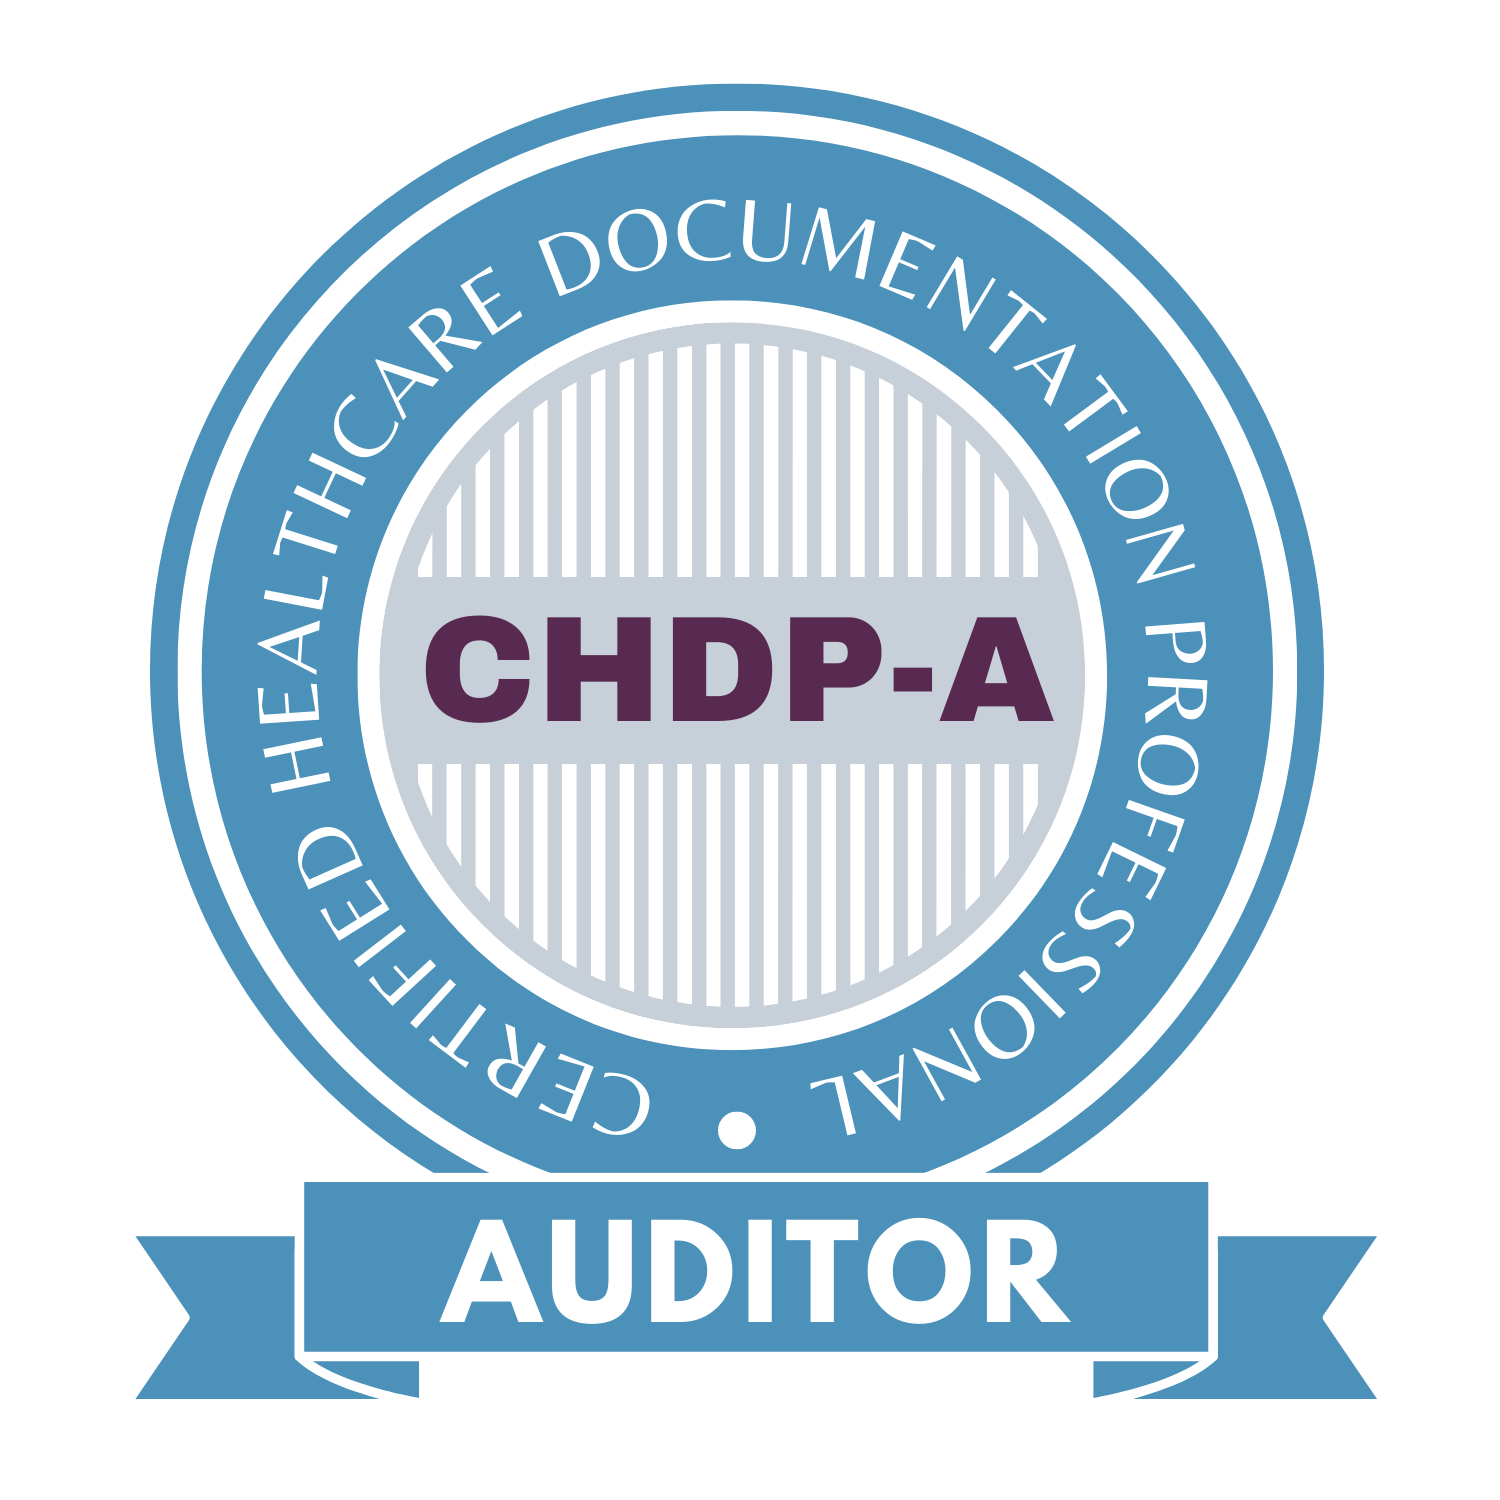 chdp-a logo